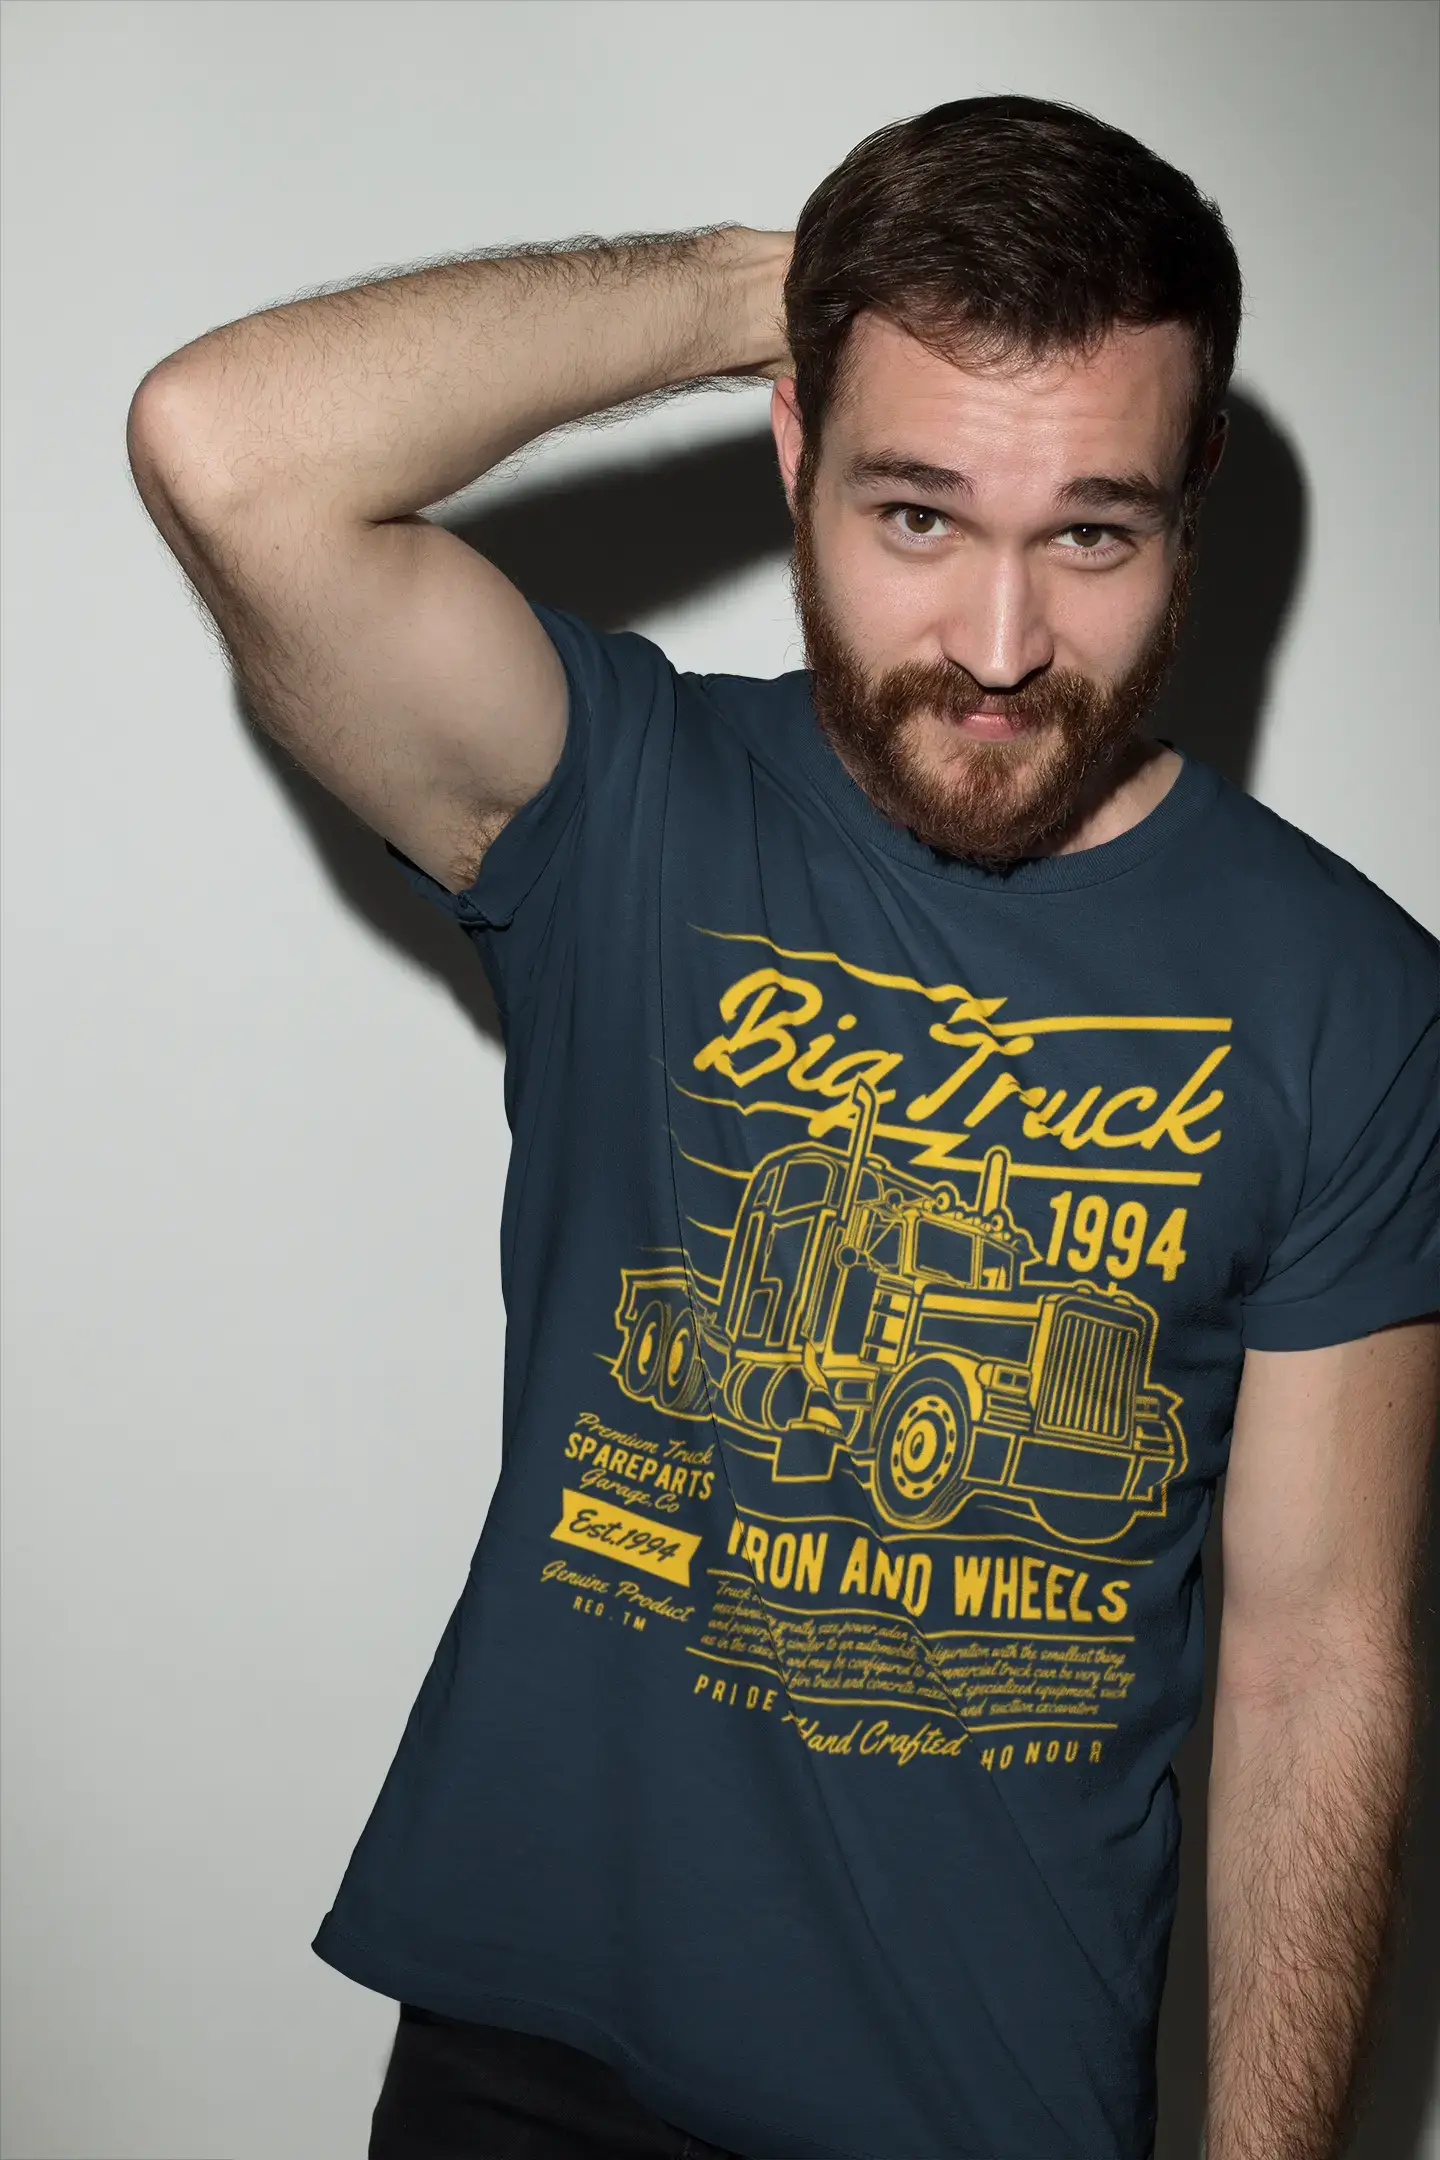 ULTRABASIC Herren T-Shirt Big Truck Since 1994 – Shirt für LKW-Fahrer